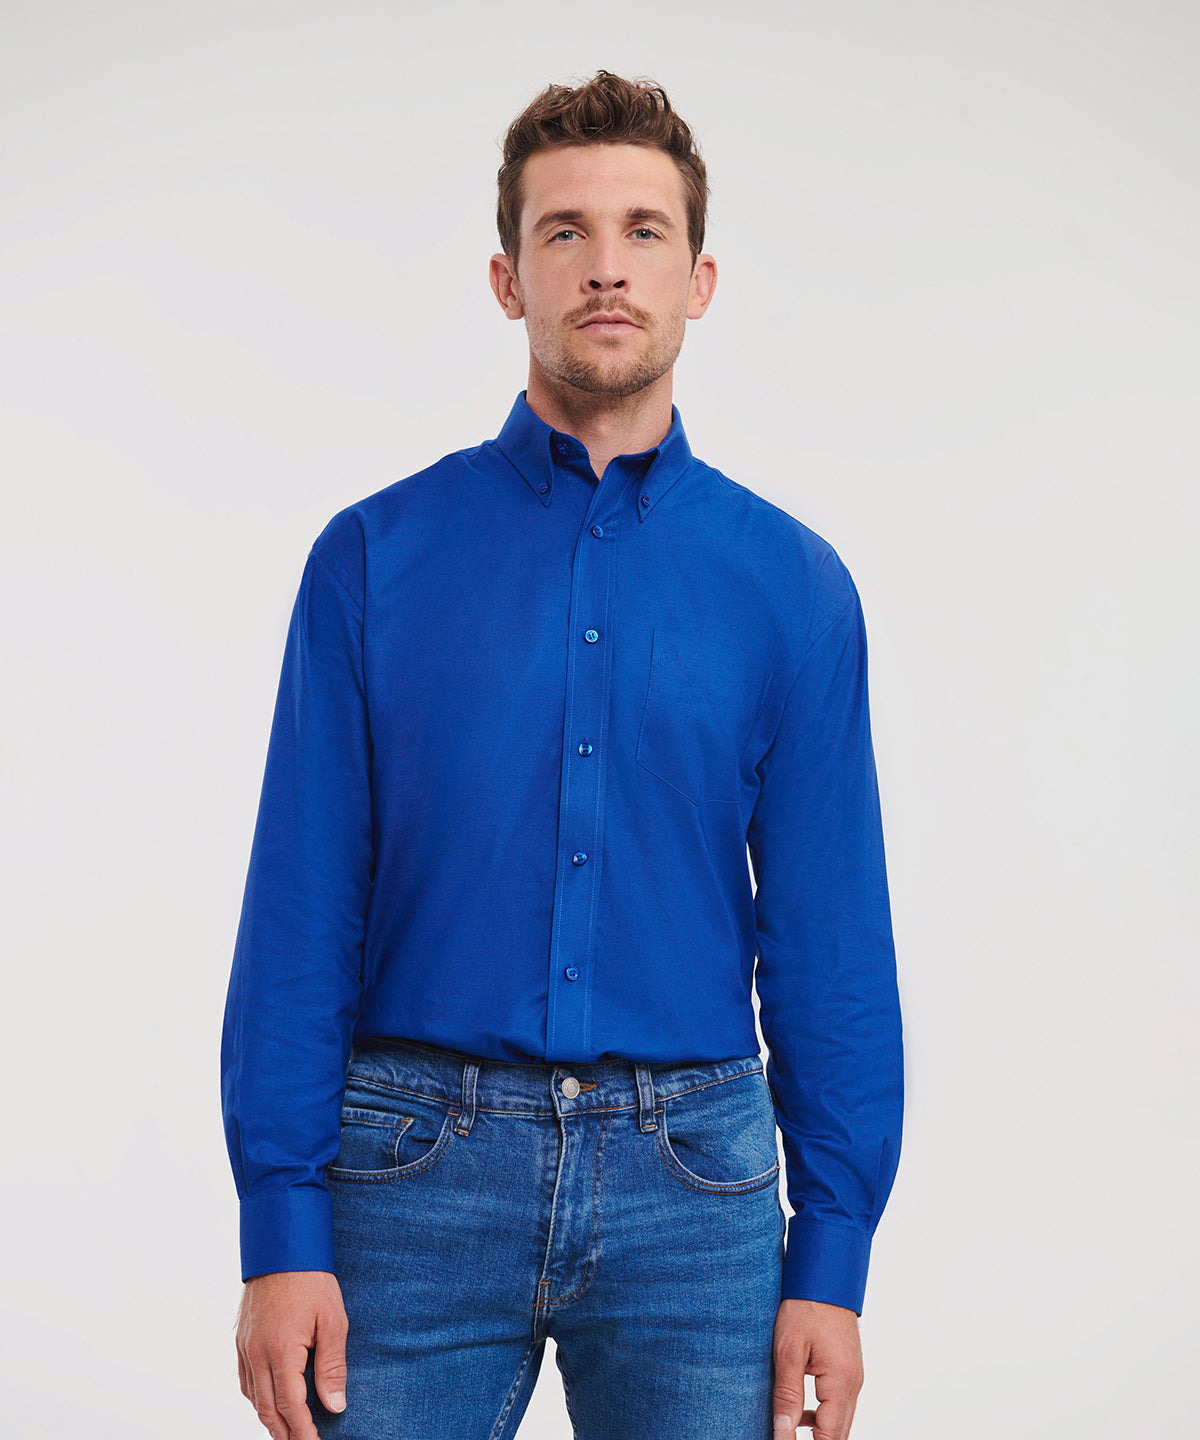 Bolir - Long Sleeve Easycare Oxford Shirt